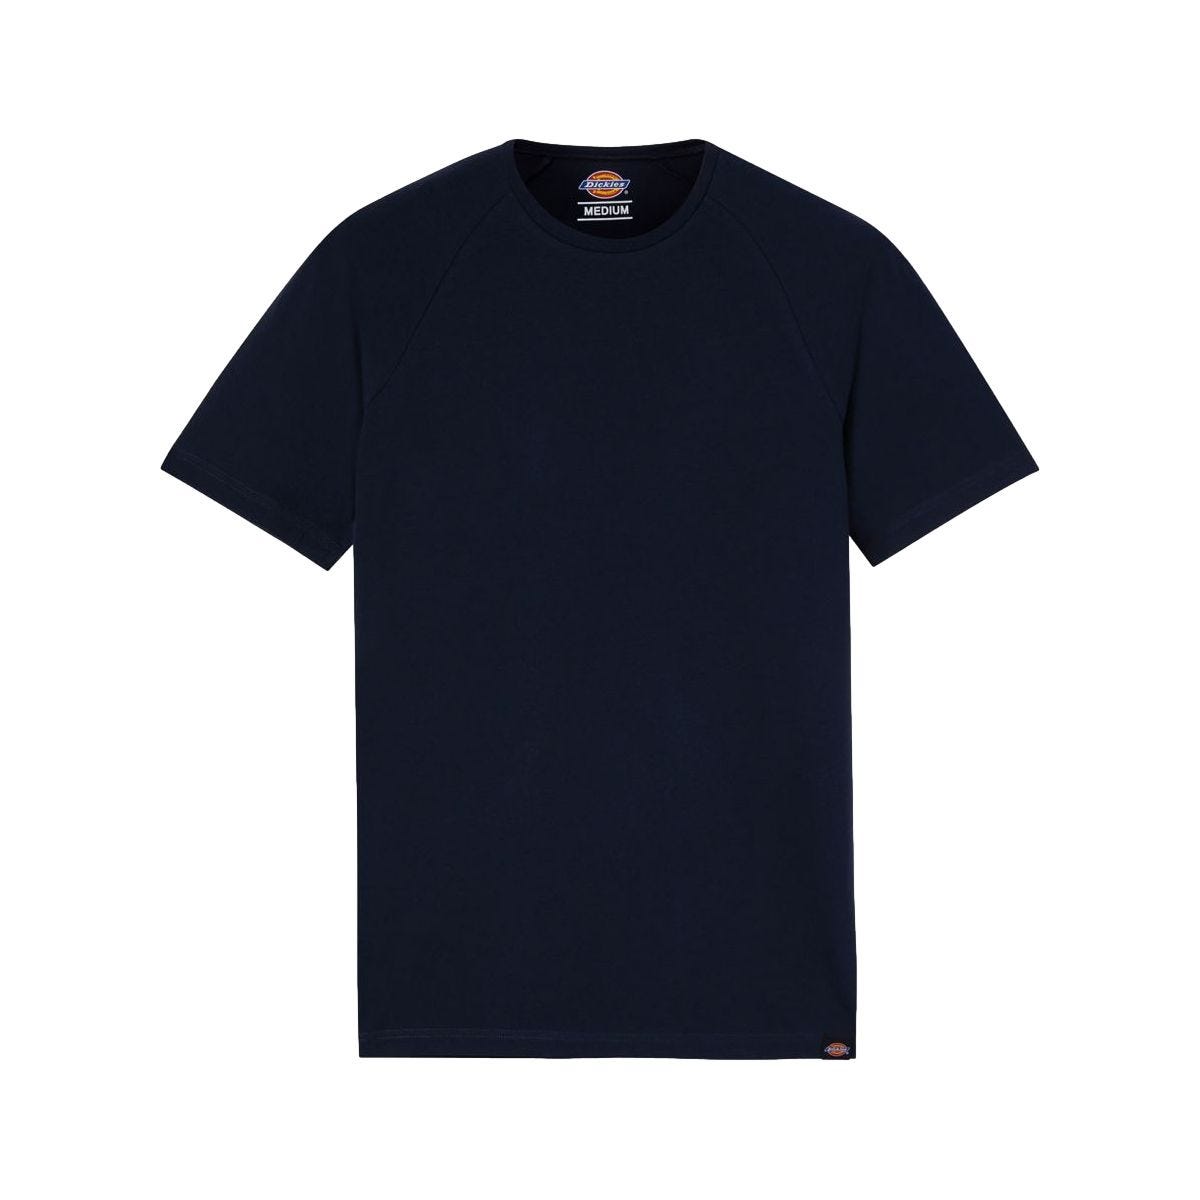 Tee-shirt Temp-IQ Bleu marine - Dickies - Taille M 0